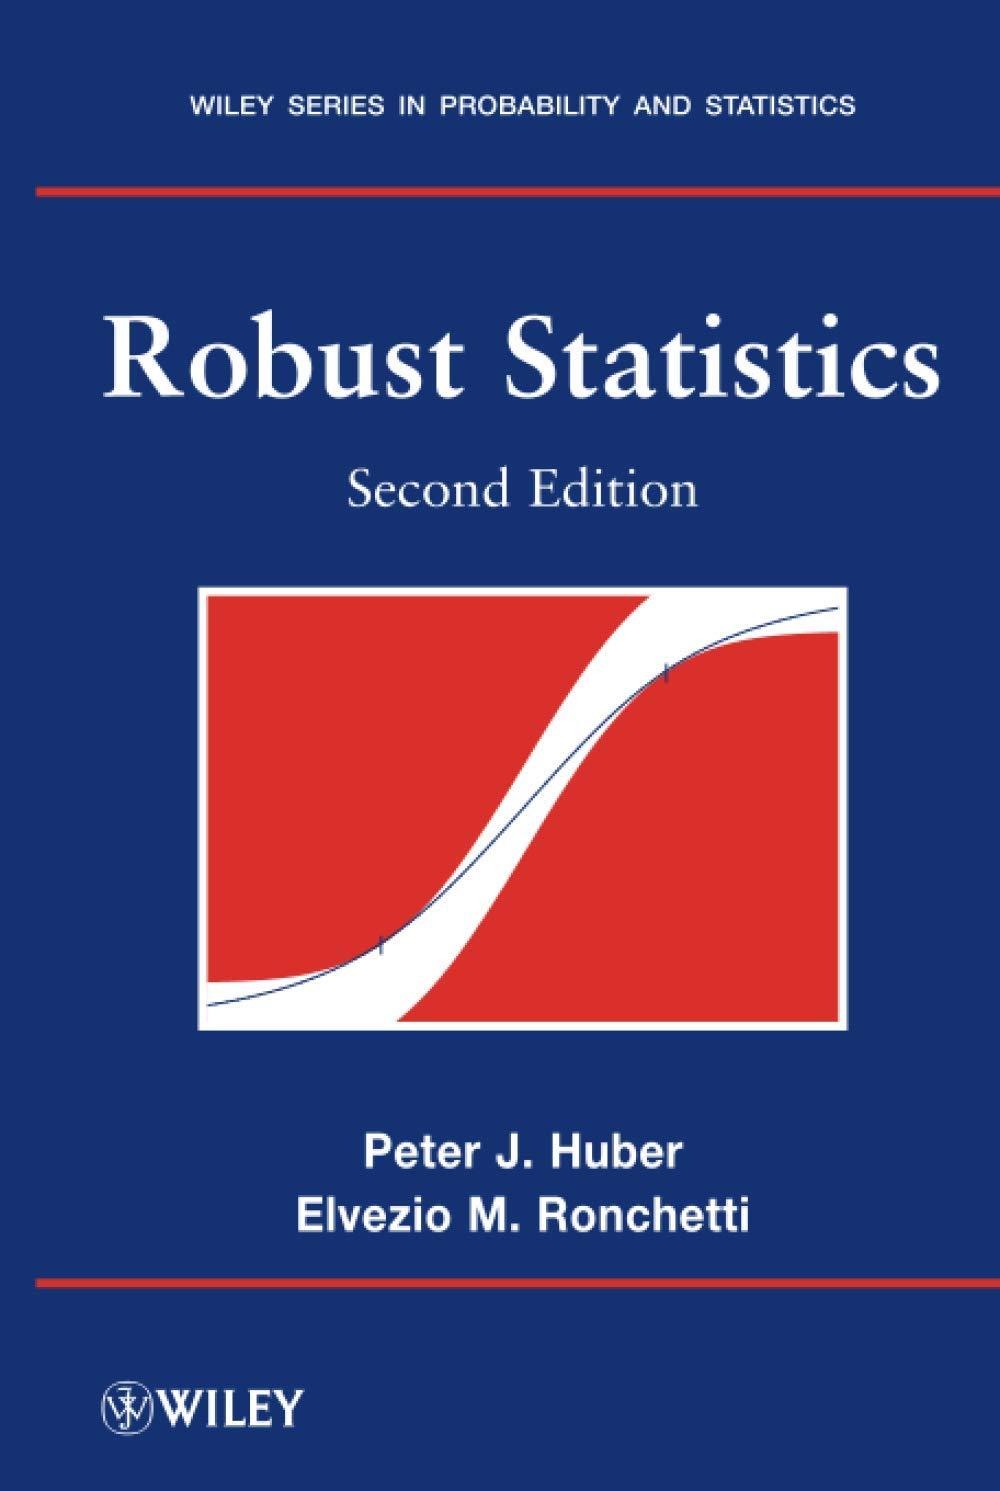 robust statistics 2nd edition peter j. huber, elvezio m. ronchetti 0470129905, 978-0470129906